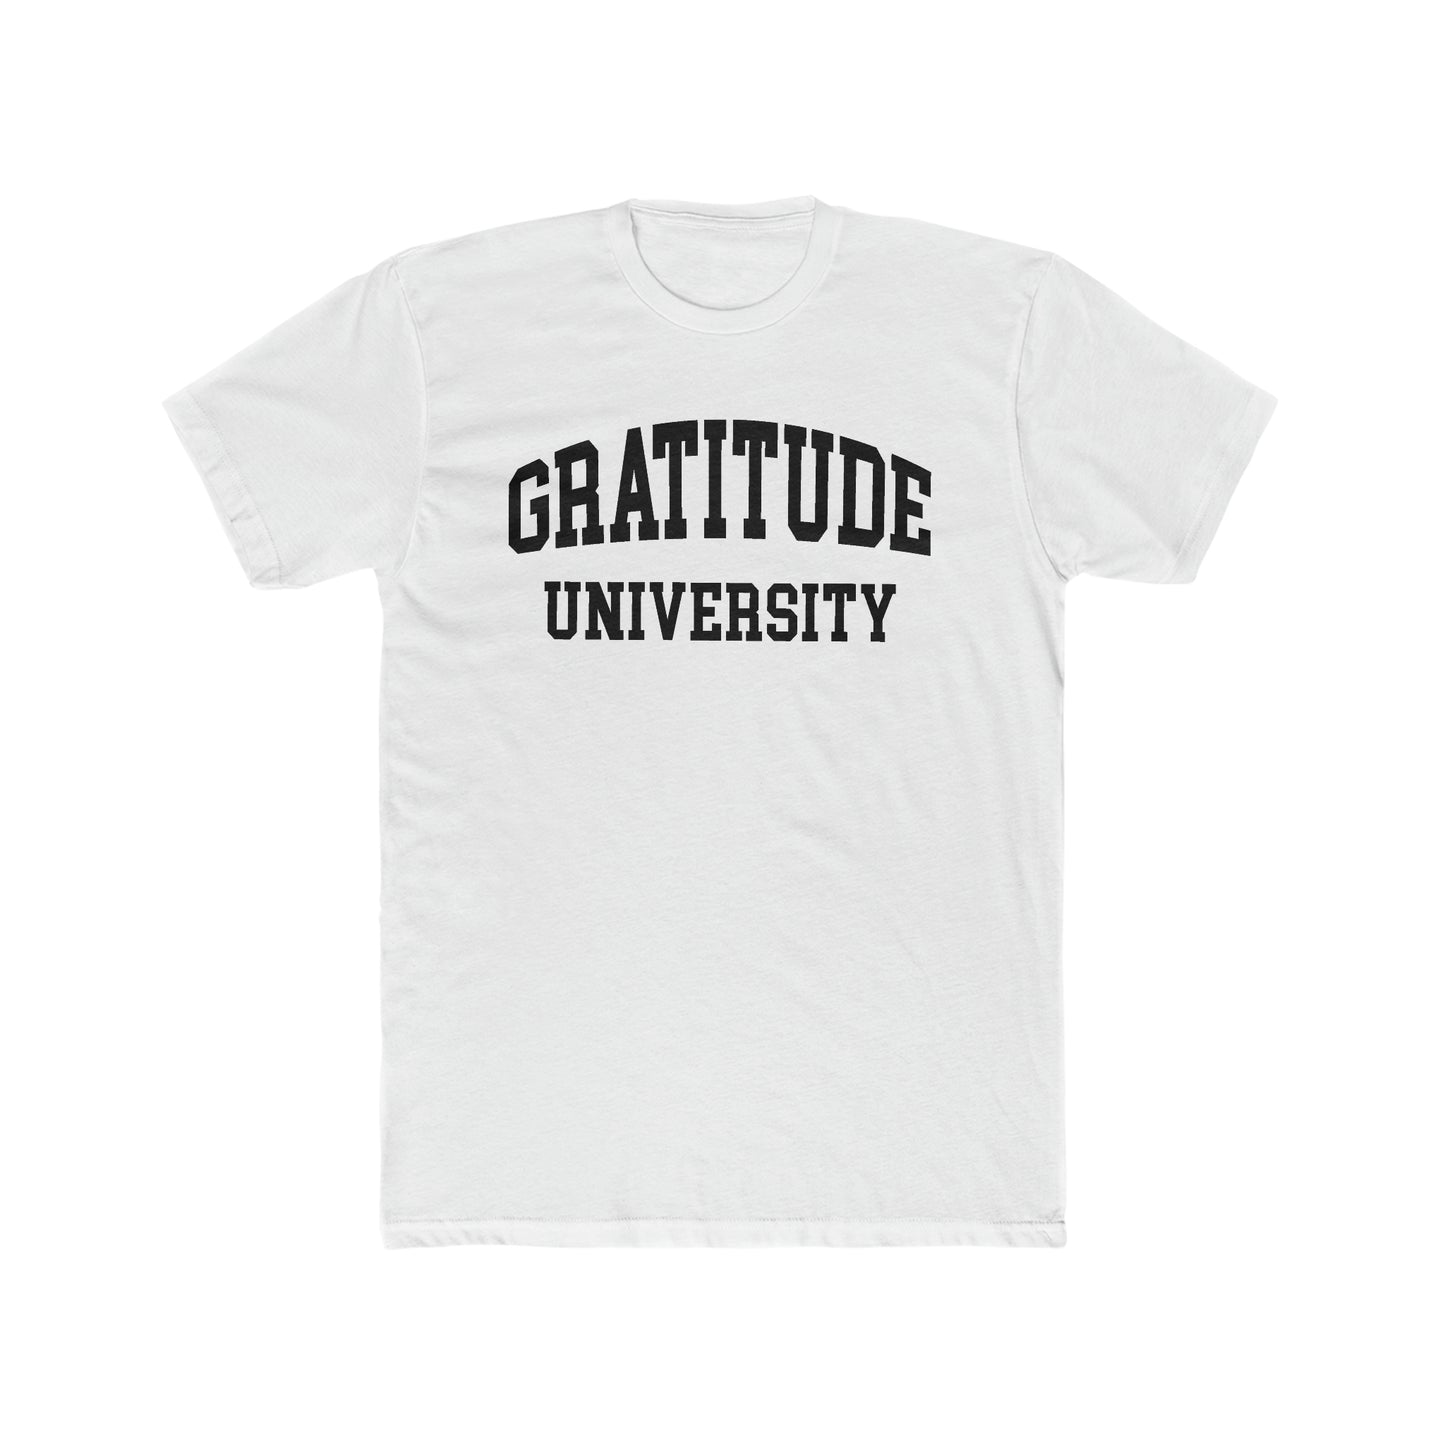 "Gratitude University" Tee